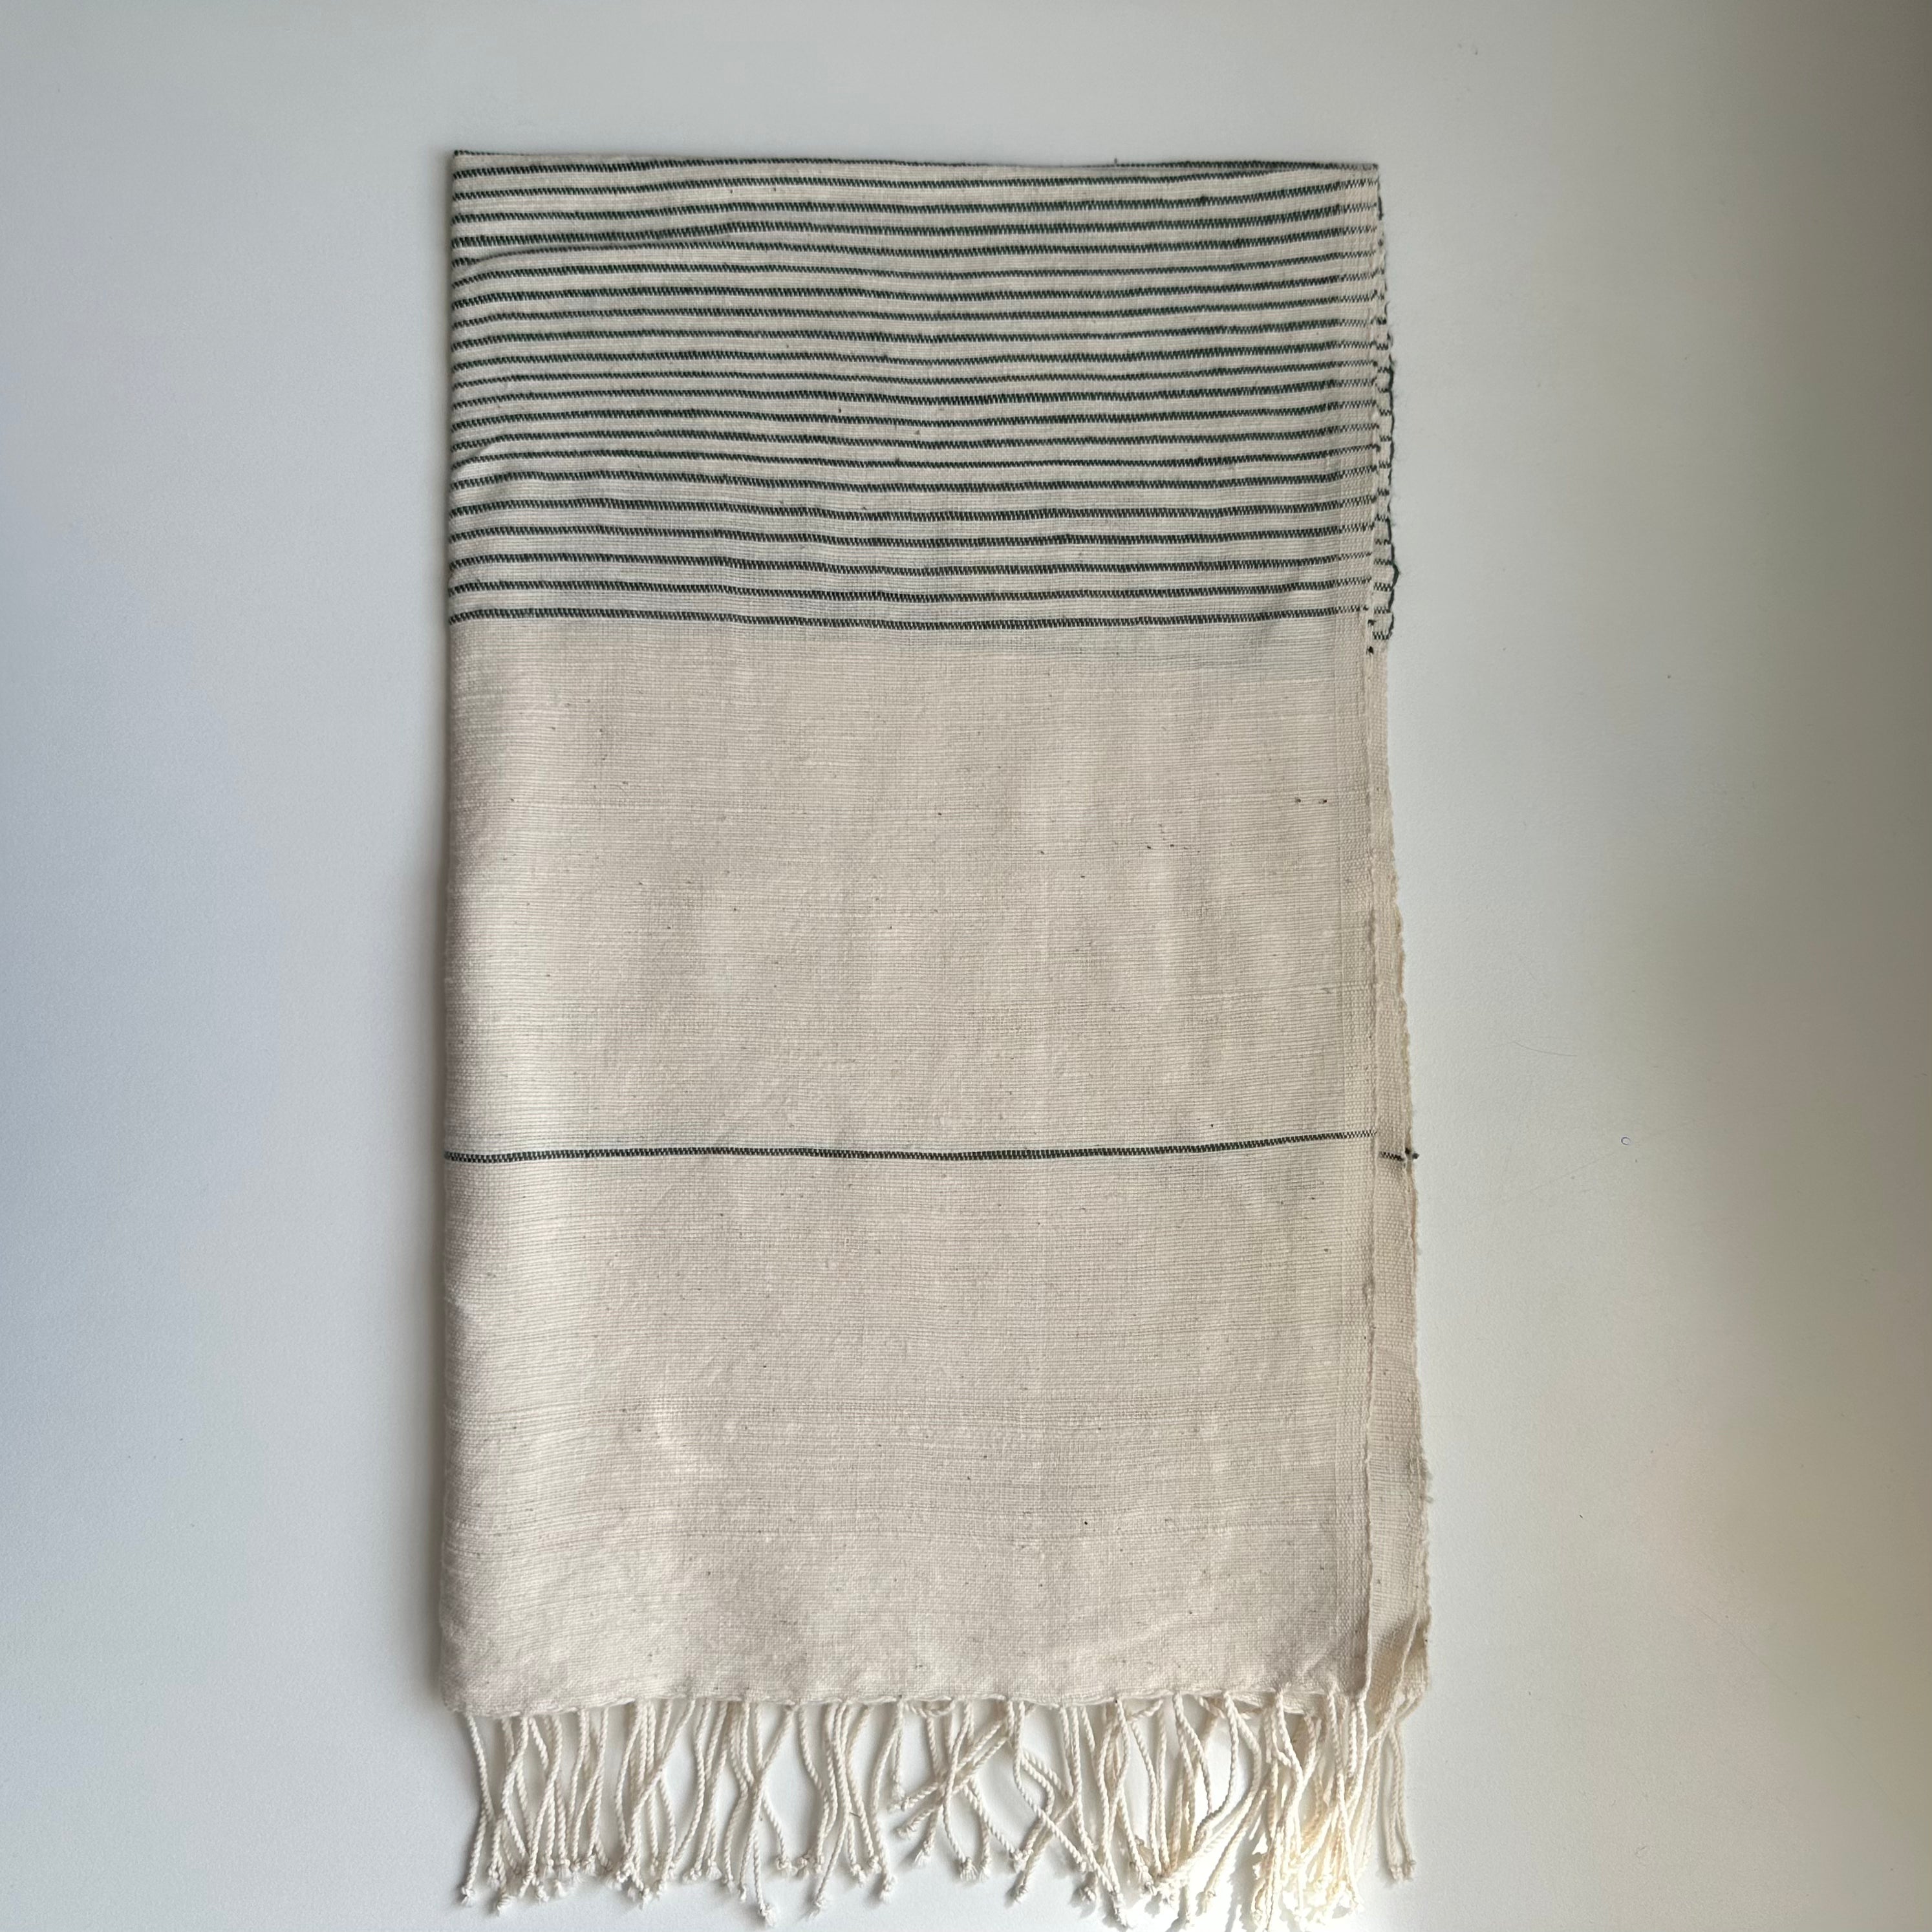 Cedar hand spun Ethiopian cotton hand towel